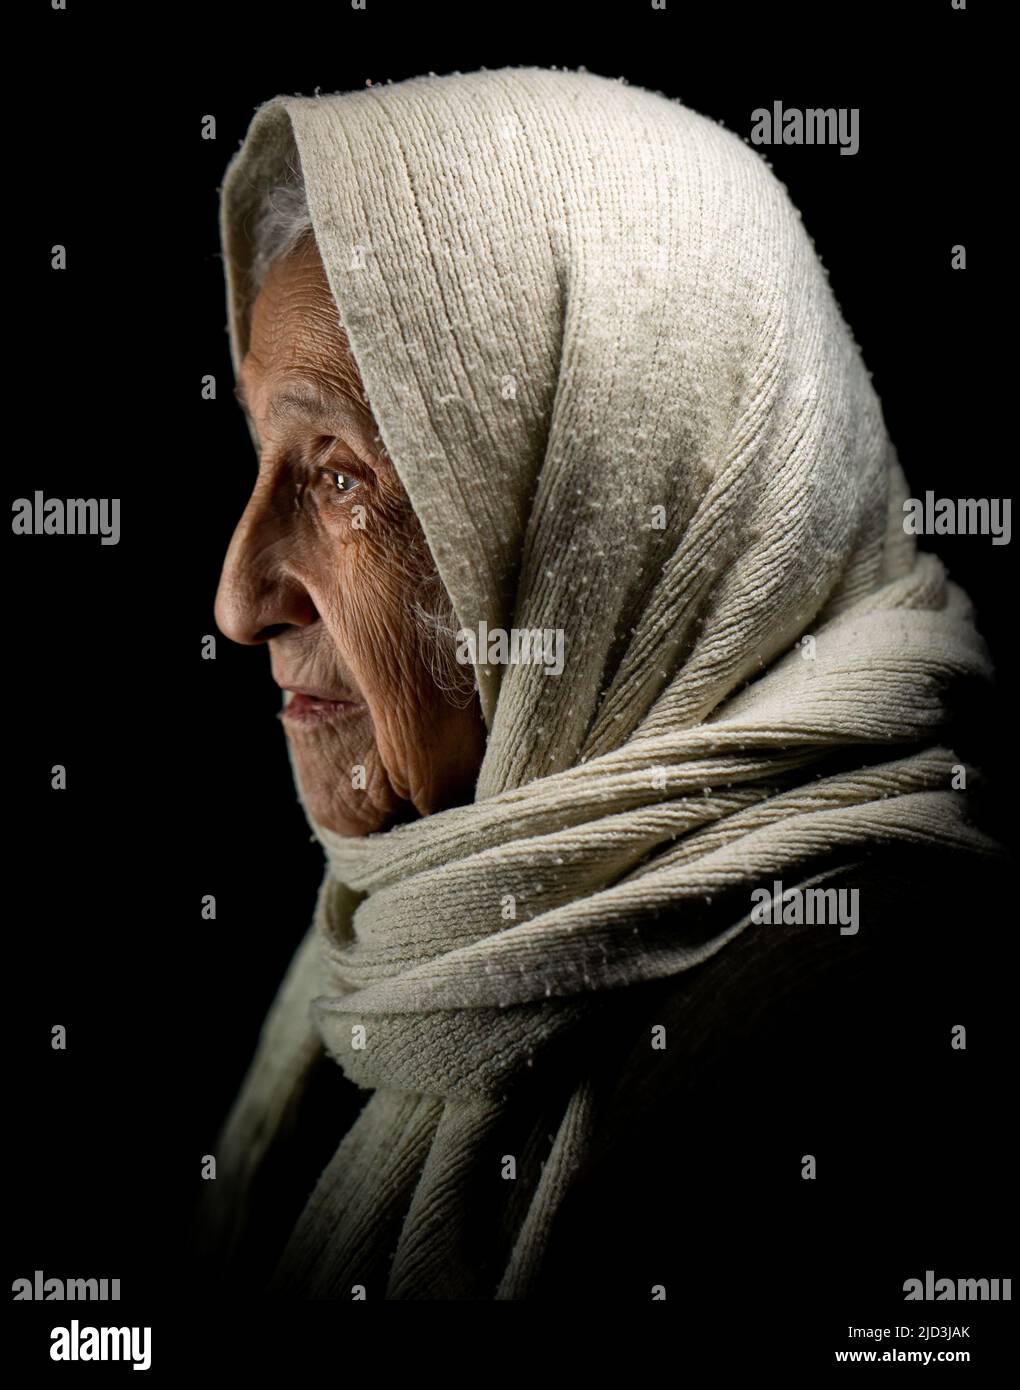 Elderly woman with kerchief, studio portrait. High quality photo Stock Photo